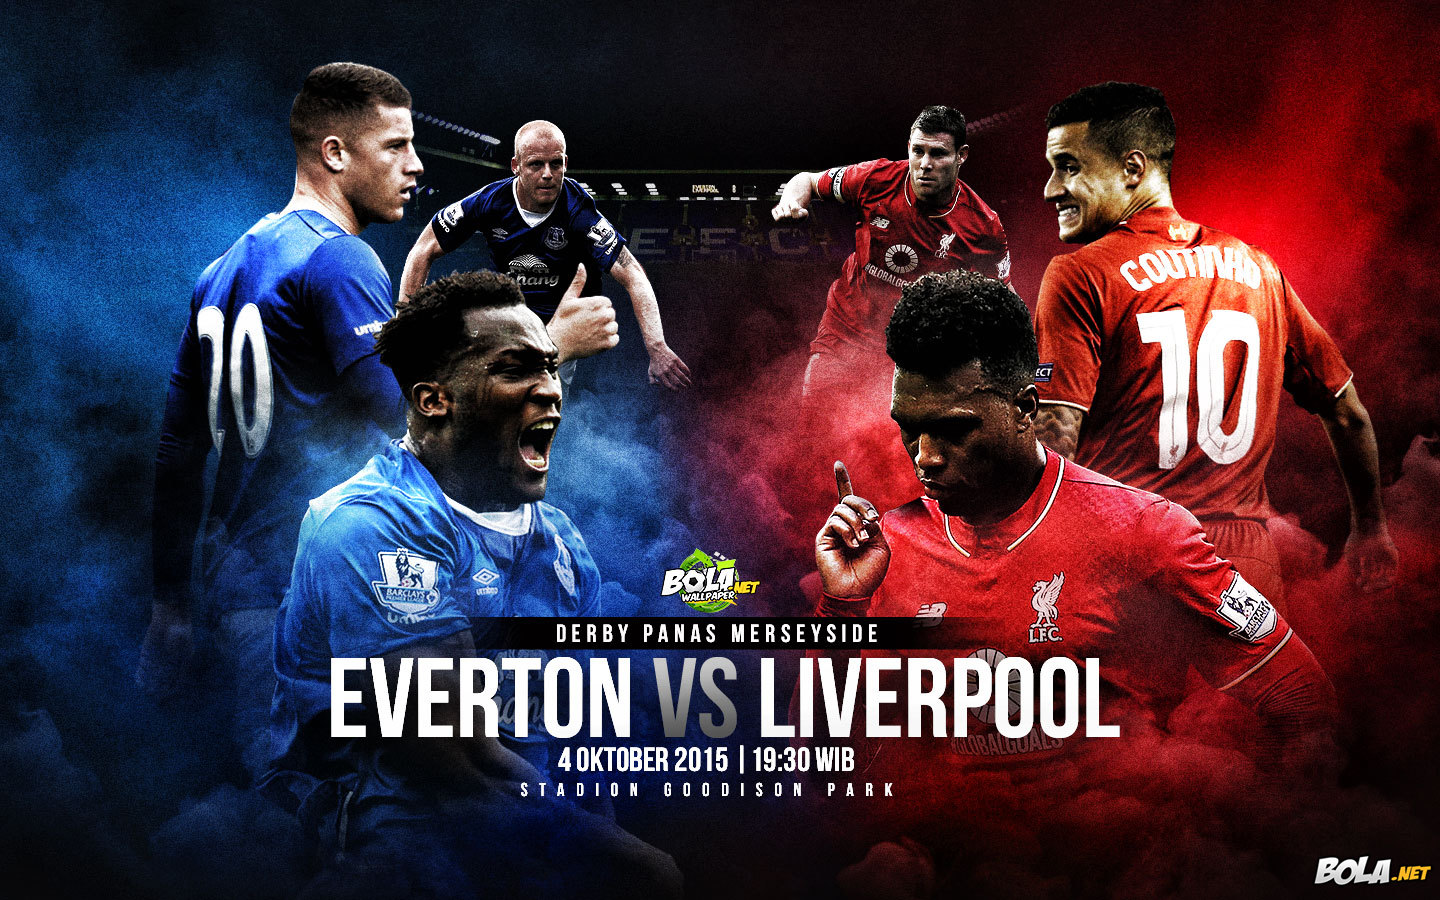 Deskripsi : Wallpaper Everton Vs Liverpool, size: 1440x900